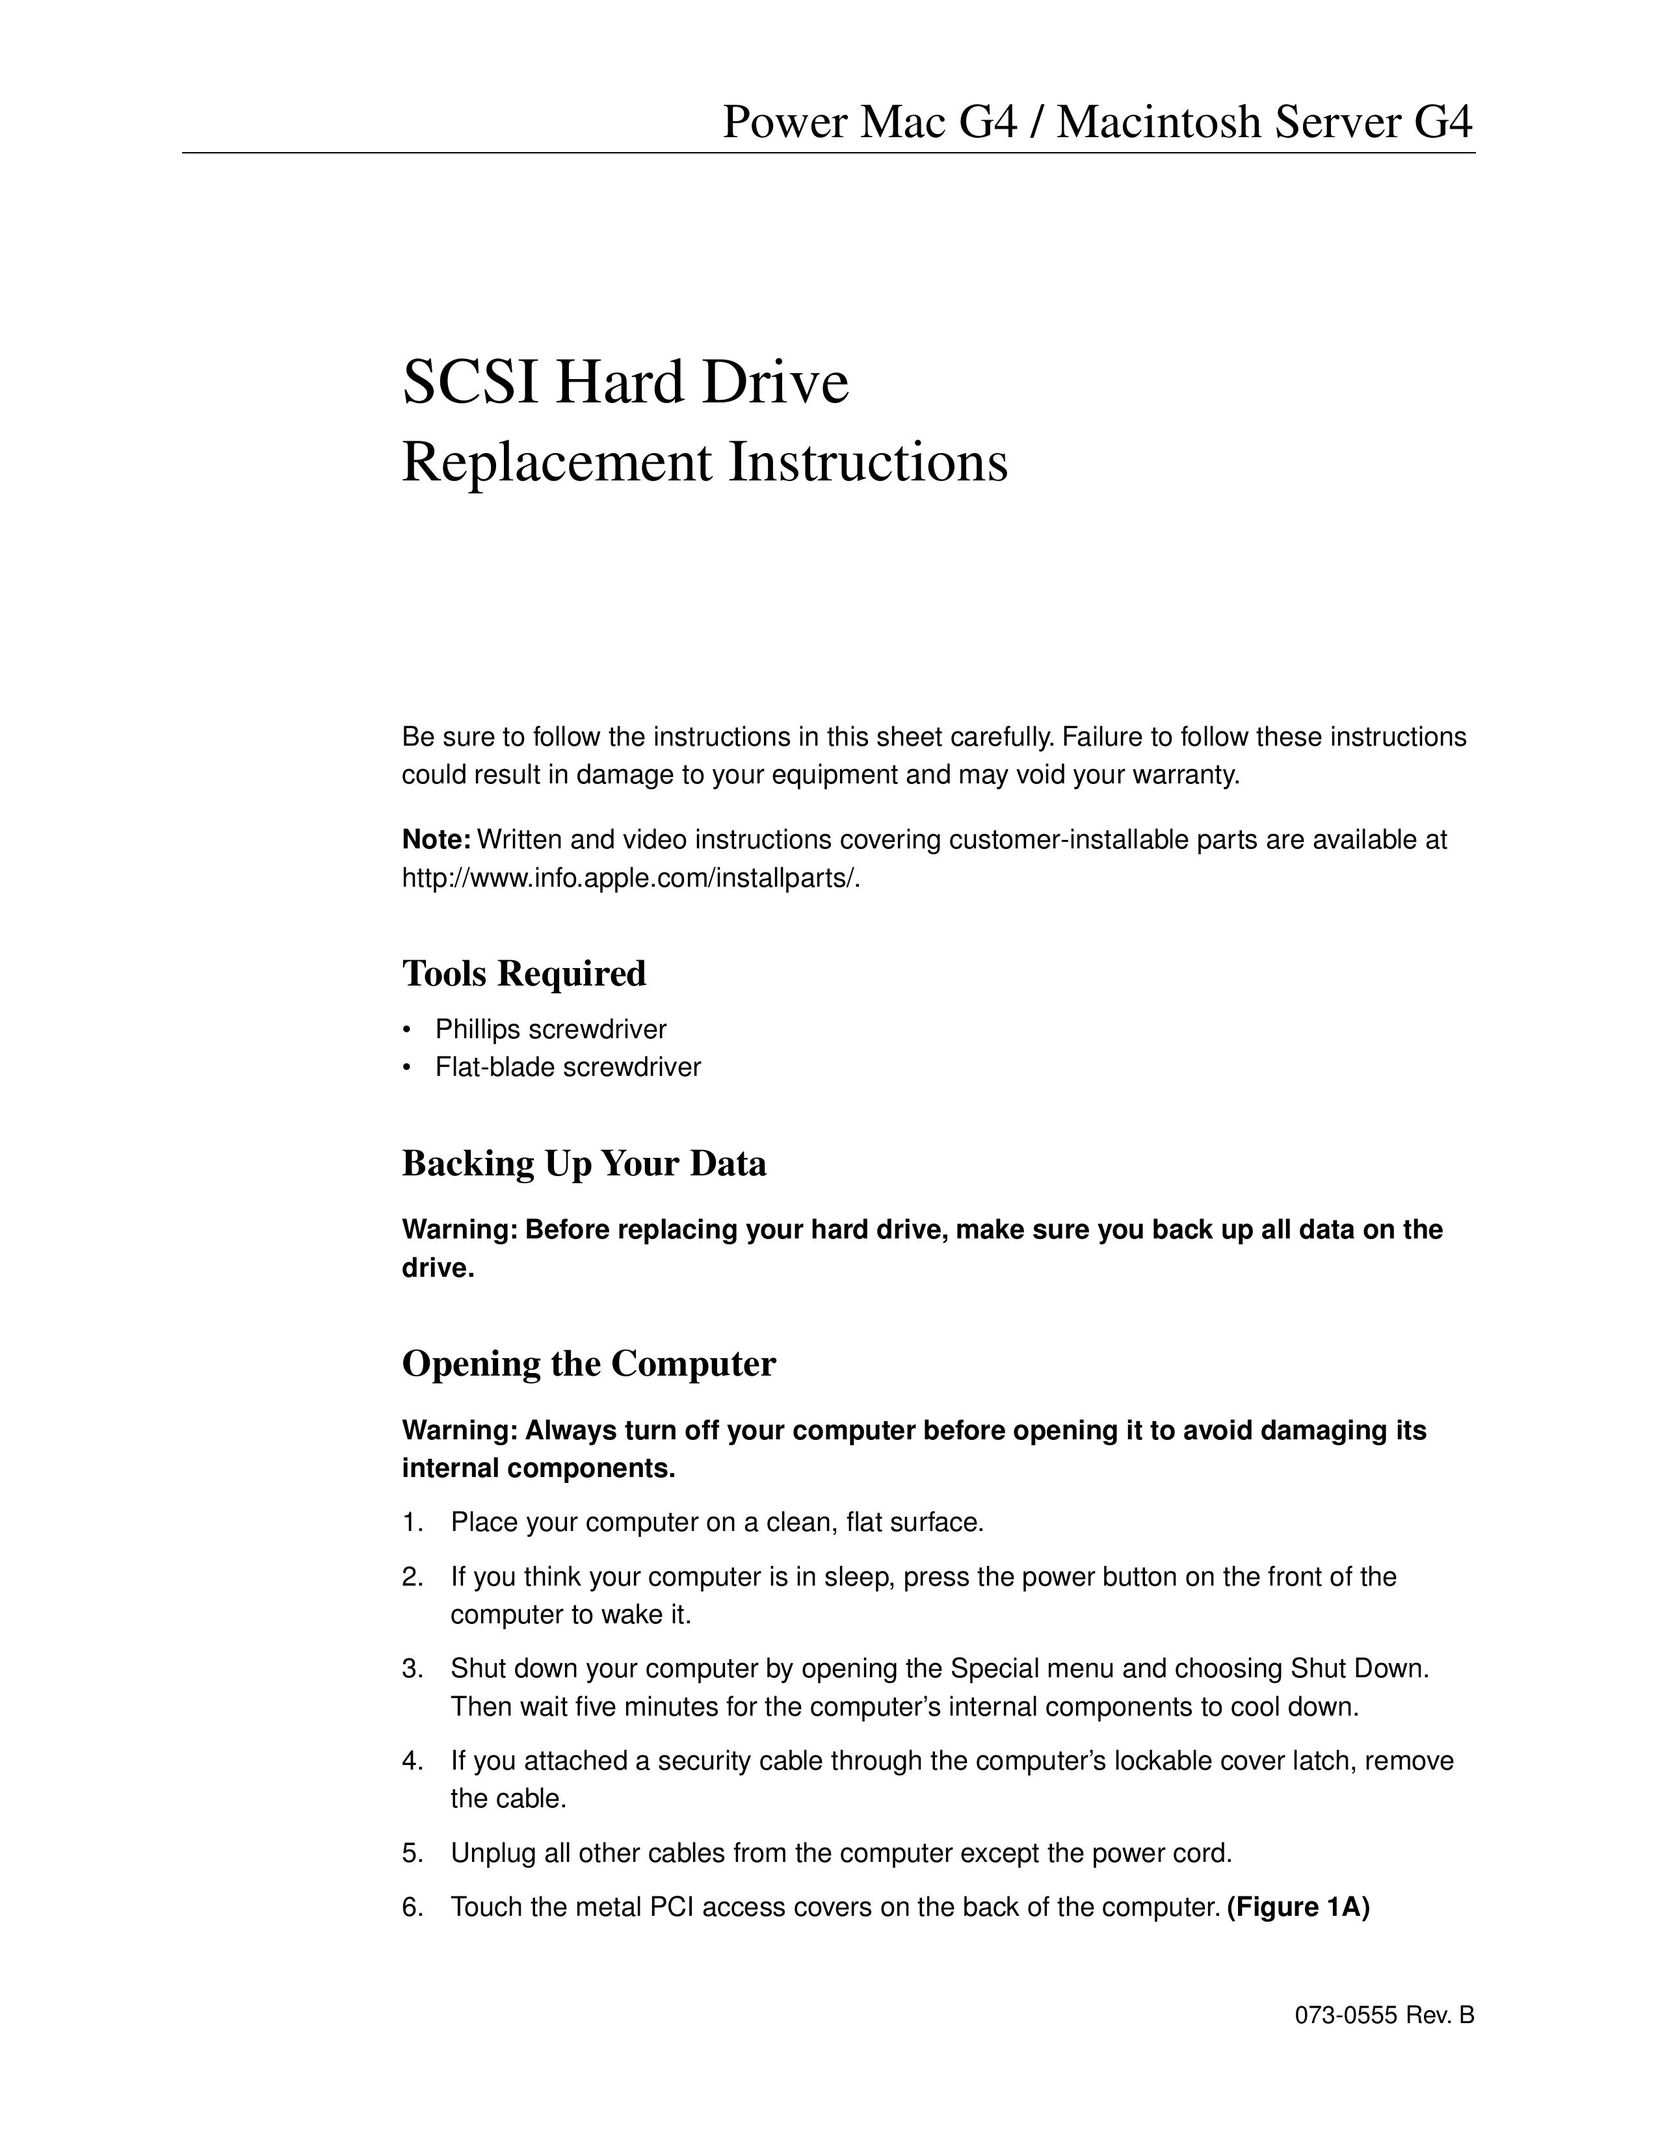 Apple SCSI Hard Drive Computer Drive User Manual